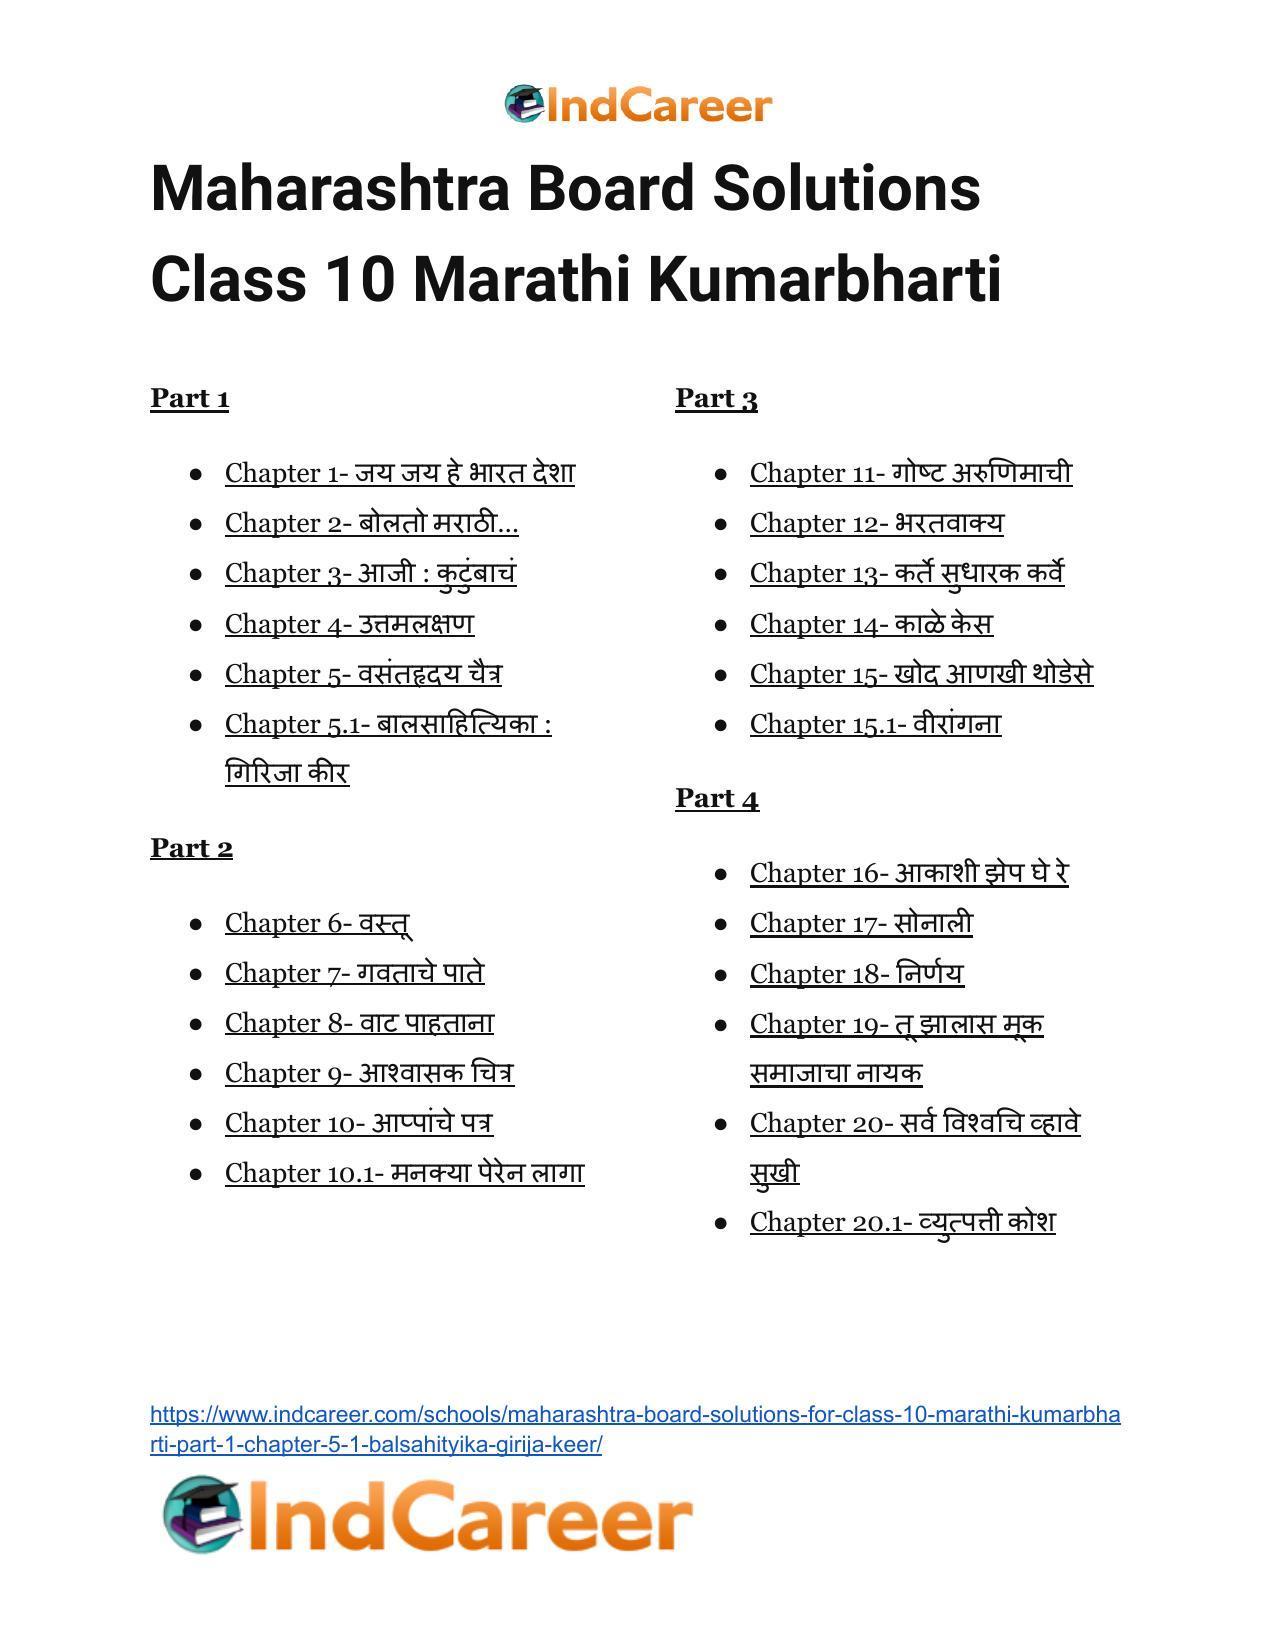 Maharashtra Board Solutions for Class 10- Marathi Kumarbharti (Part- 1): Chapter 5.1- बालसाहित्यिका : गिरिजा कीर - Page 6